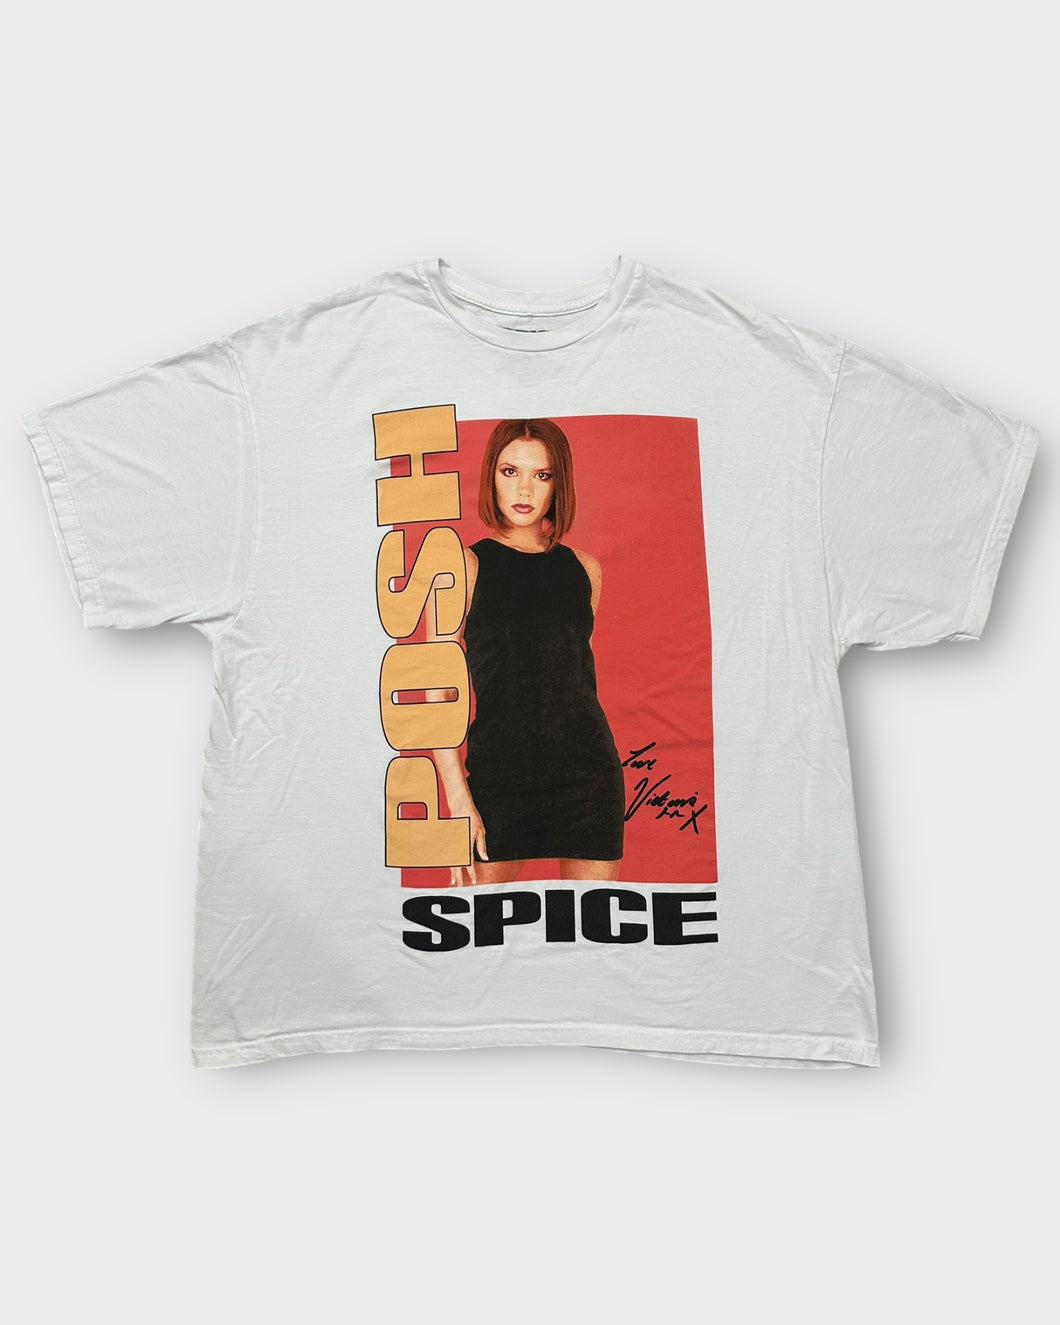 Spice Girls Posh Spice Graphic Tee (XL)